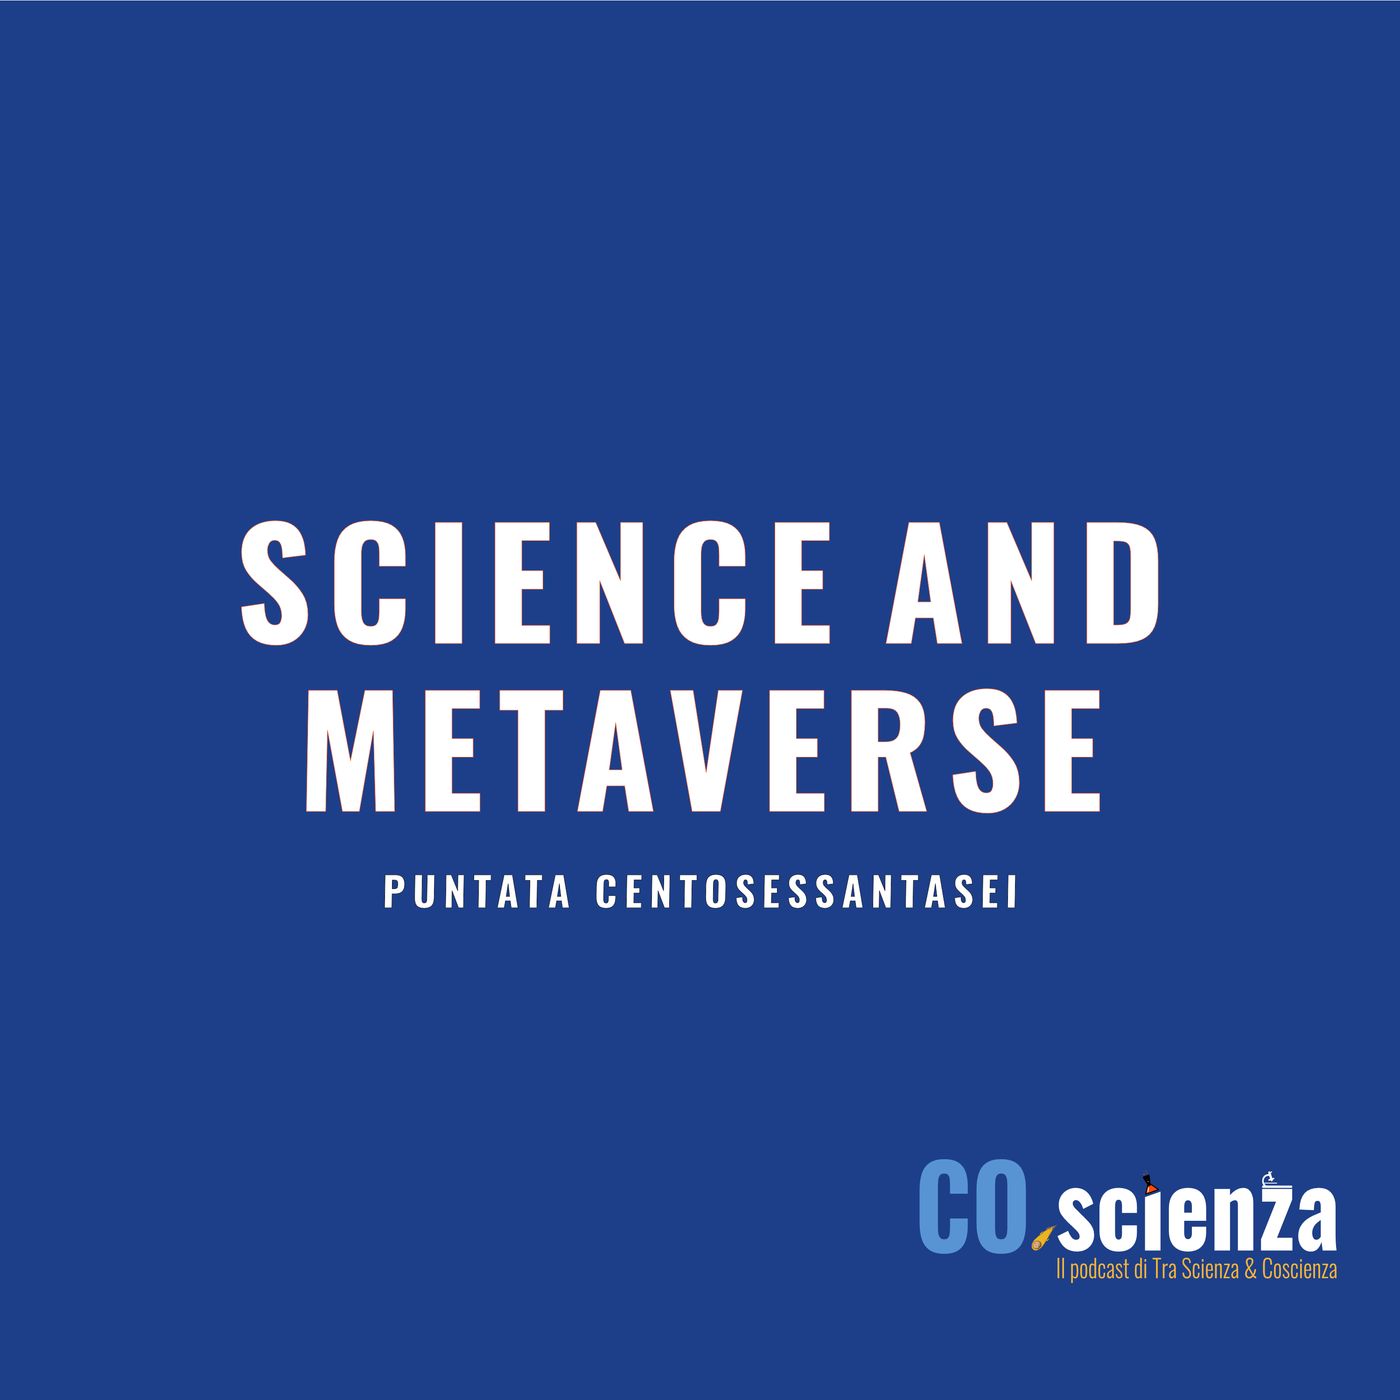 Science and metaverse (Puntata Centosessantasei)